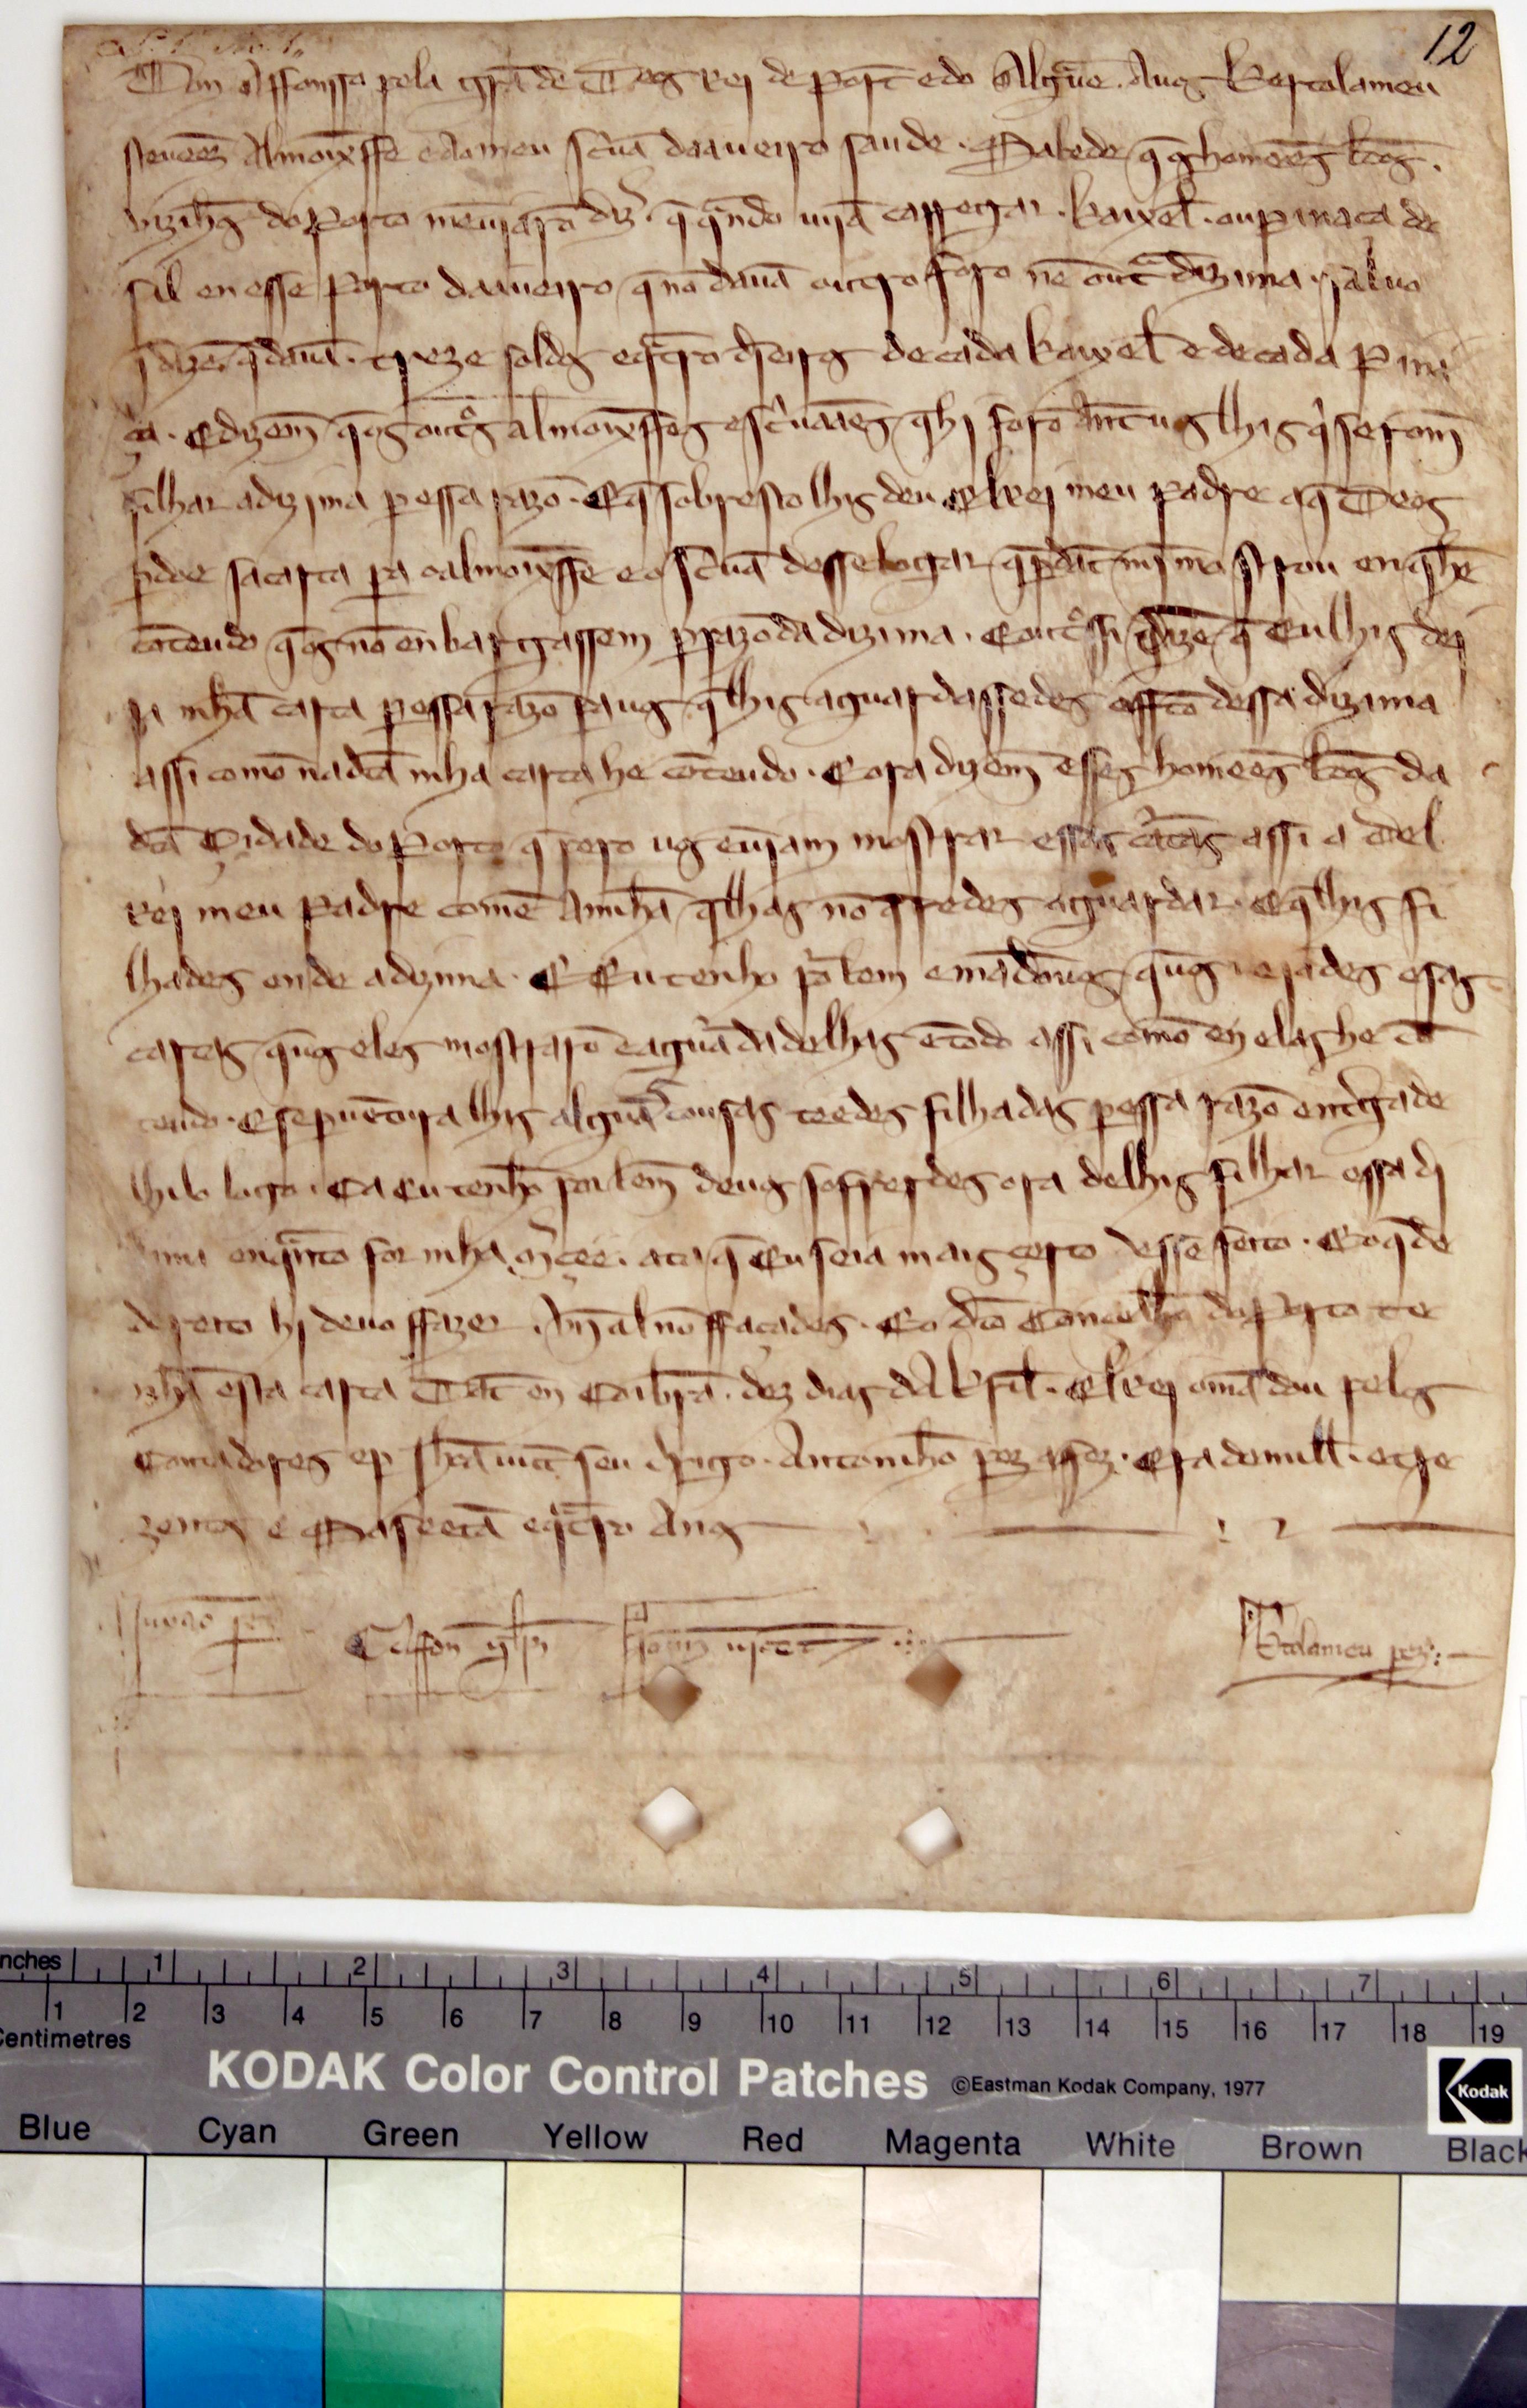 [Carta de D. Afonso IV ao almoxarife de Aveiro sobre o pagamento da dízima do sal]